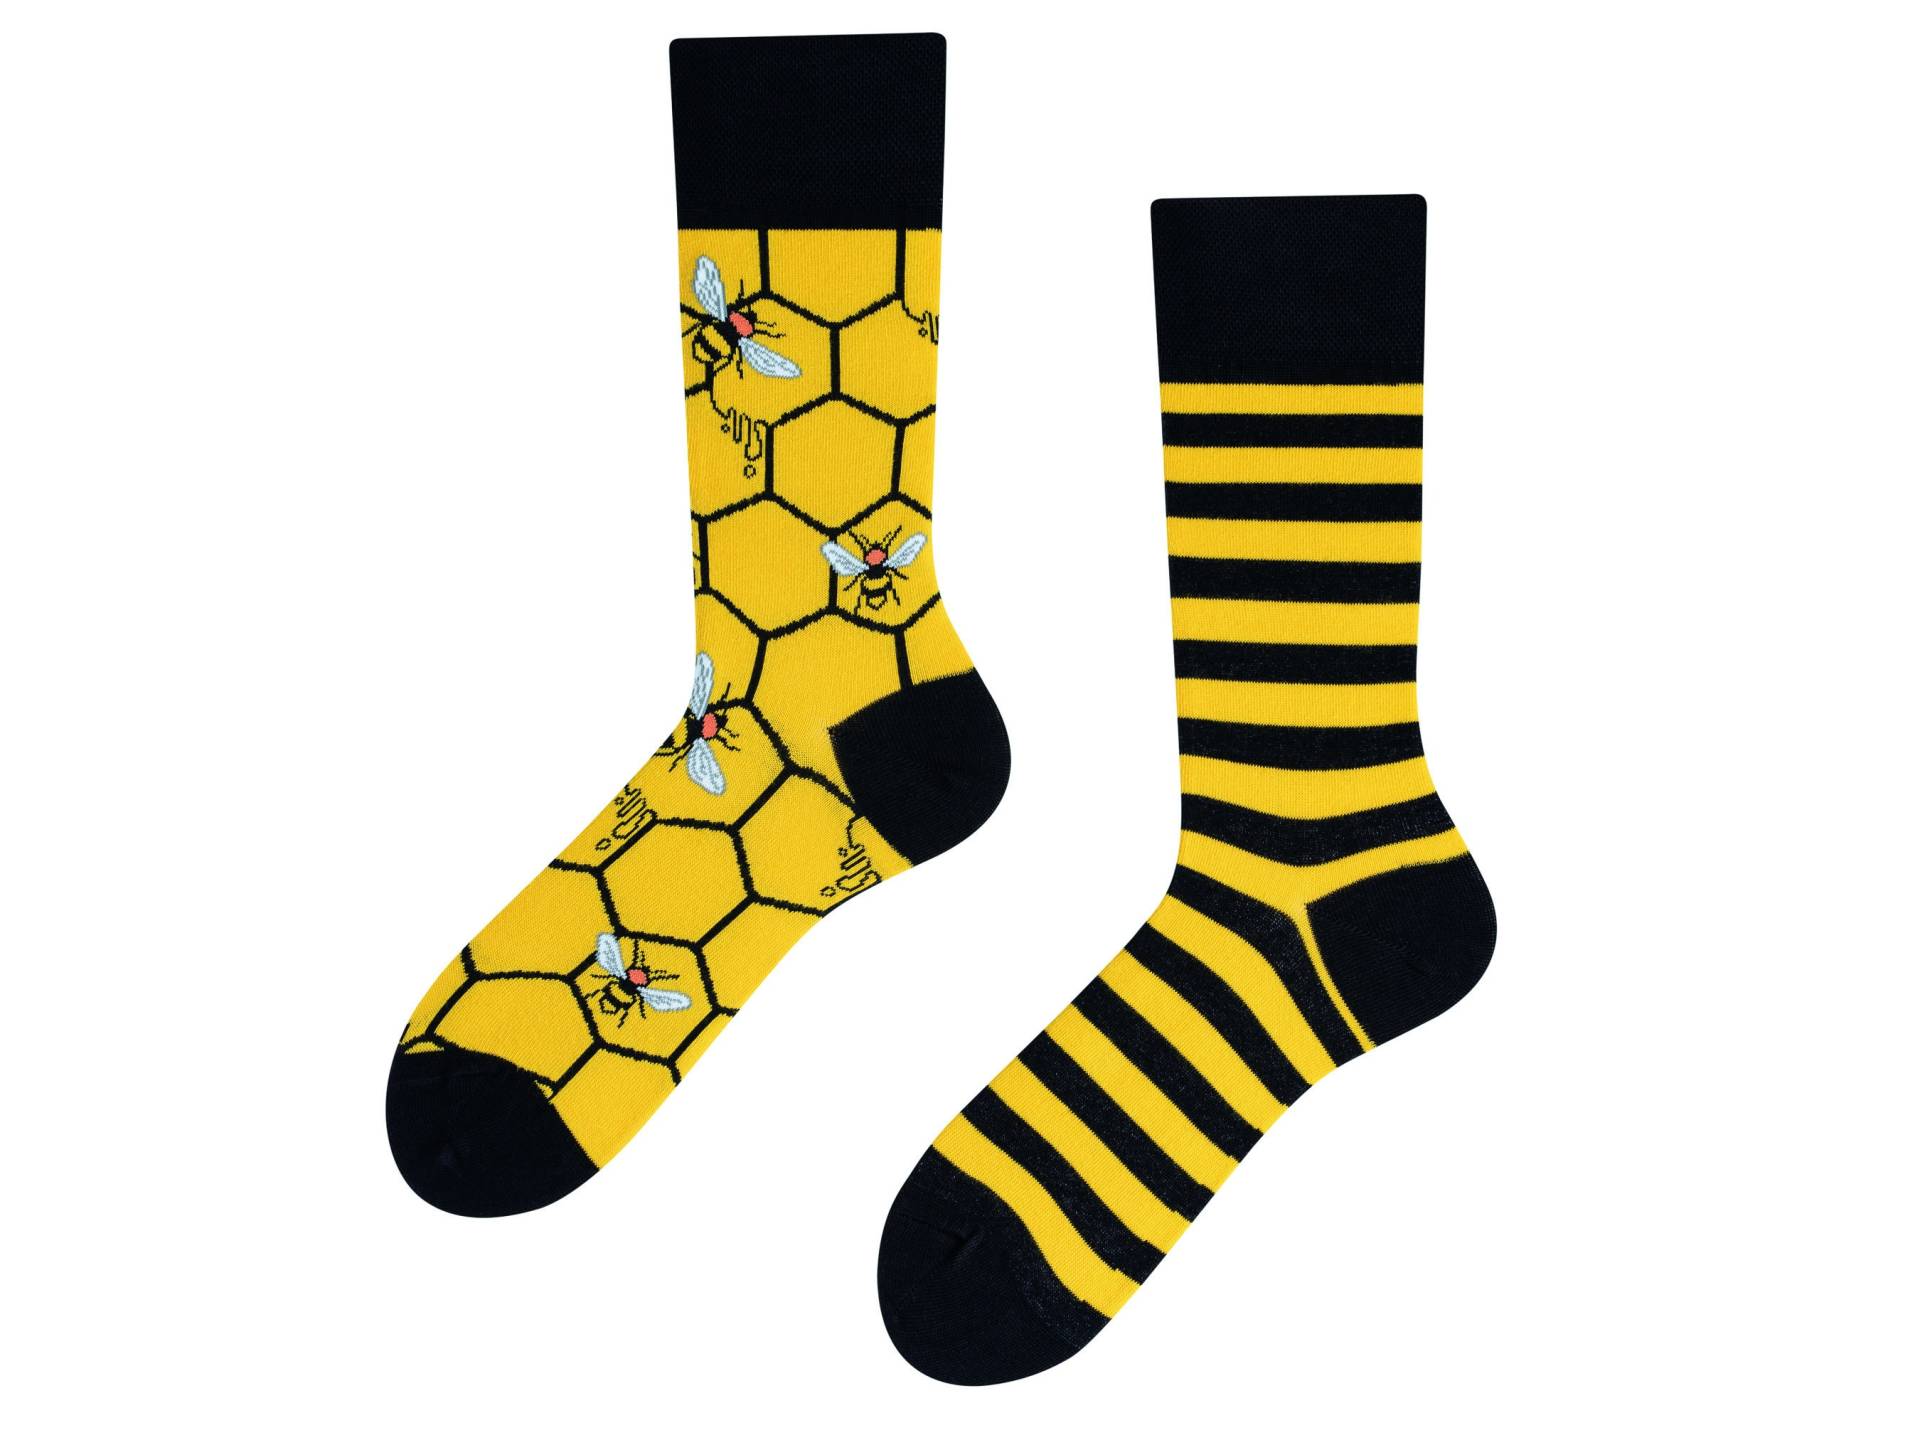 Busybee Socken | Bienensocken Coole Schwarz Gelbe Crazy Socks Bee Bunte Colourful Todosocks von TODOSOCKS